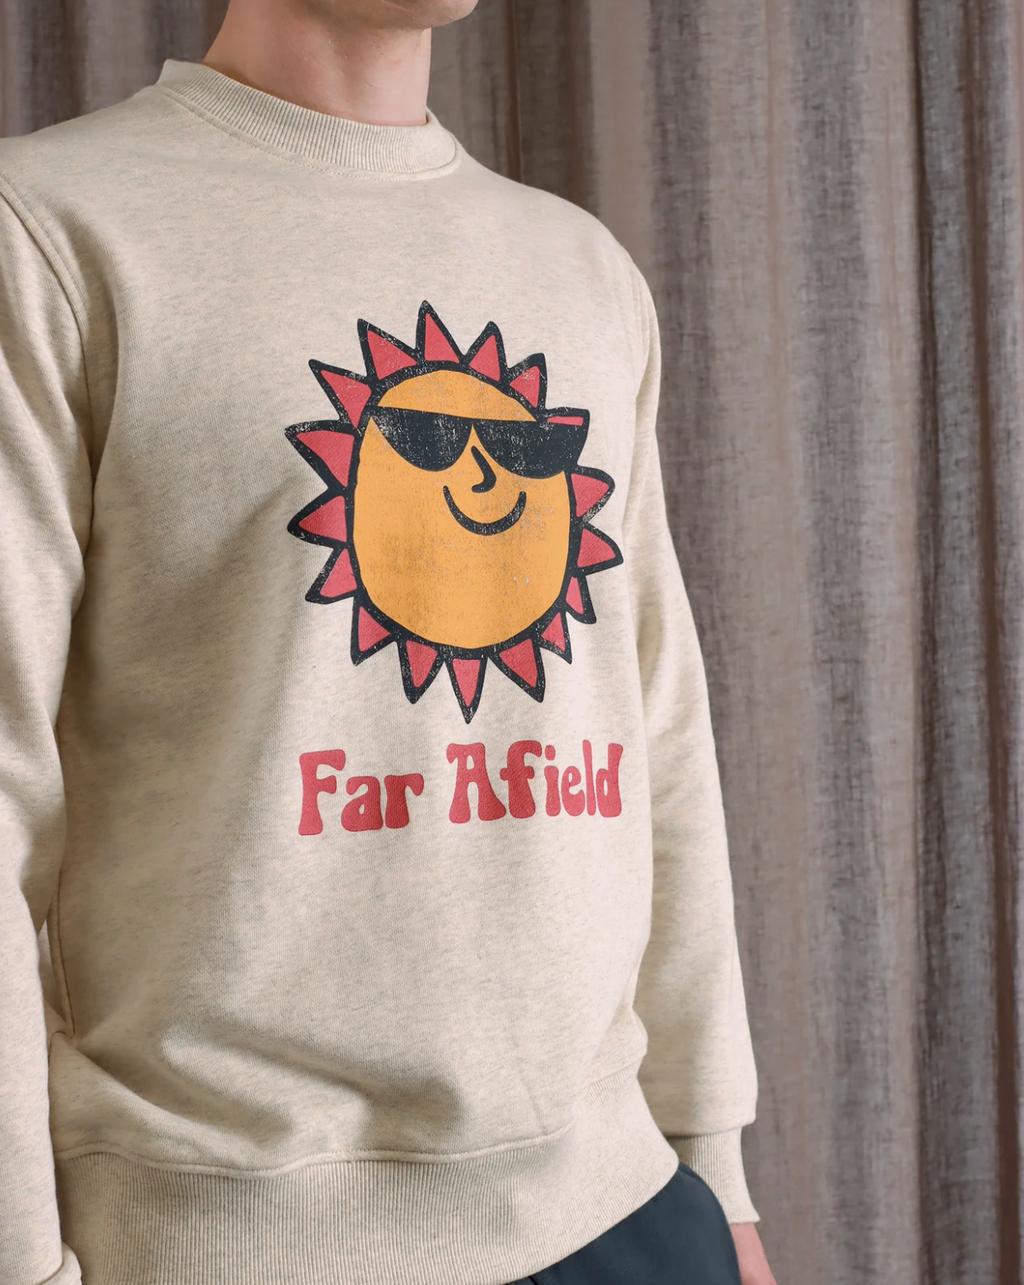 FAR AFIELD Crew Neck Sweatshirt - Grey Marl Sunny Print